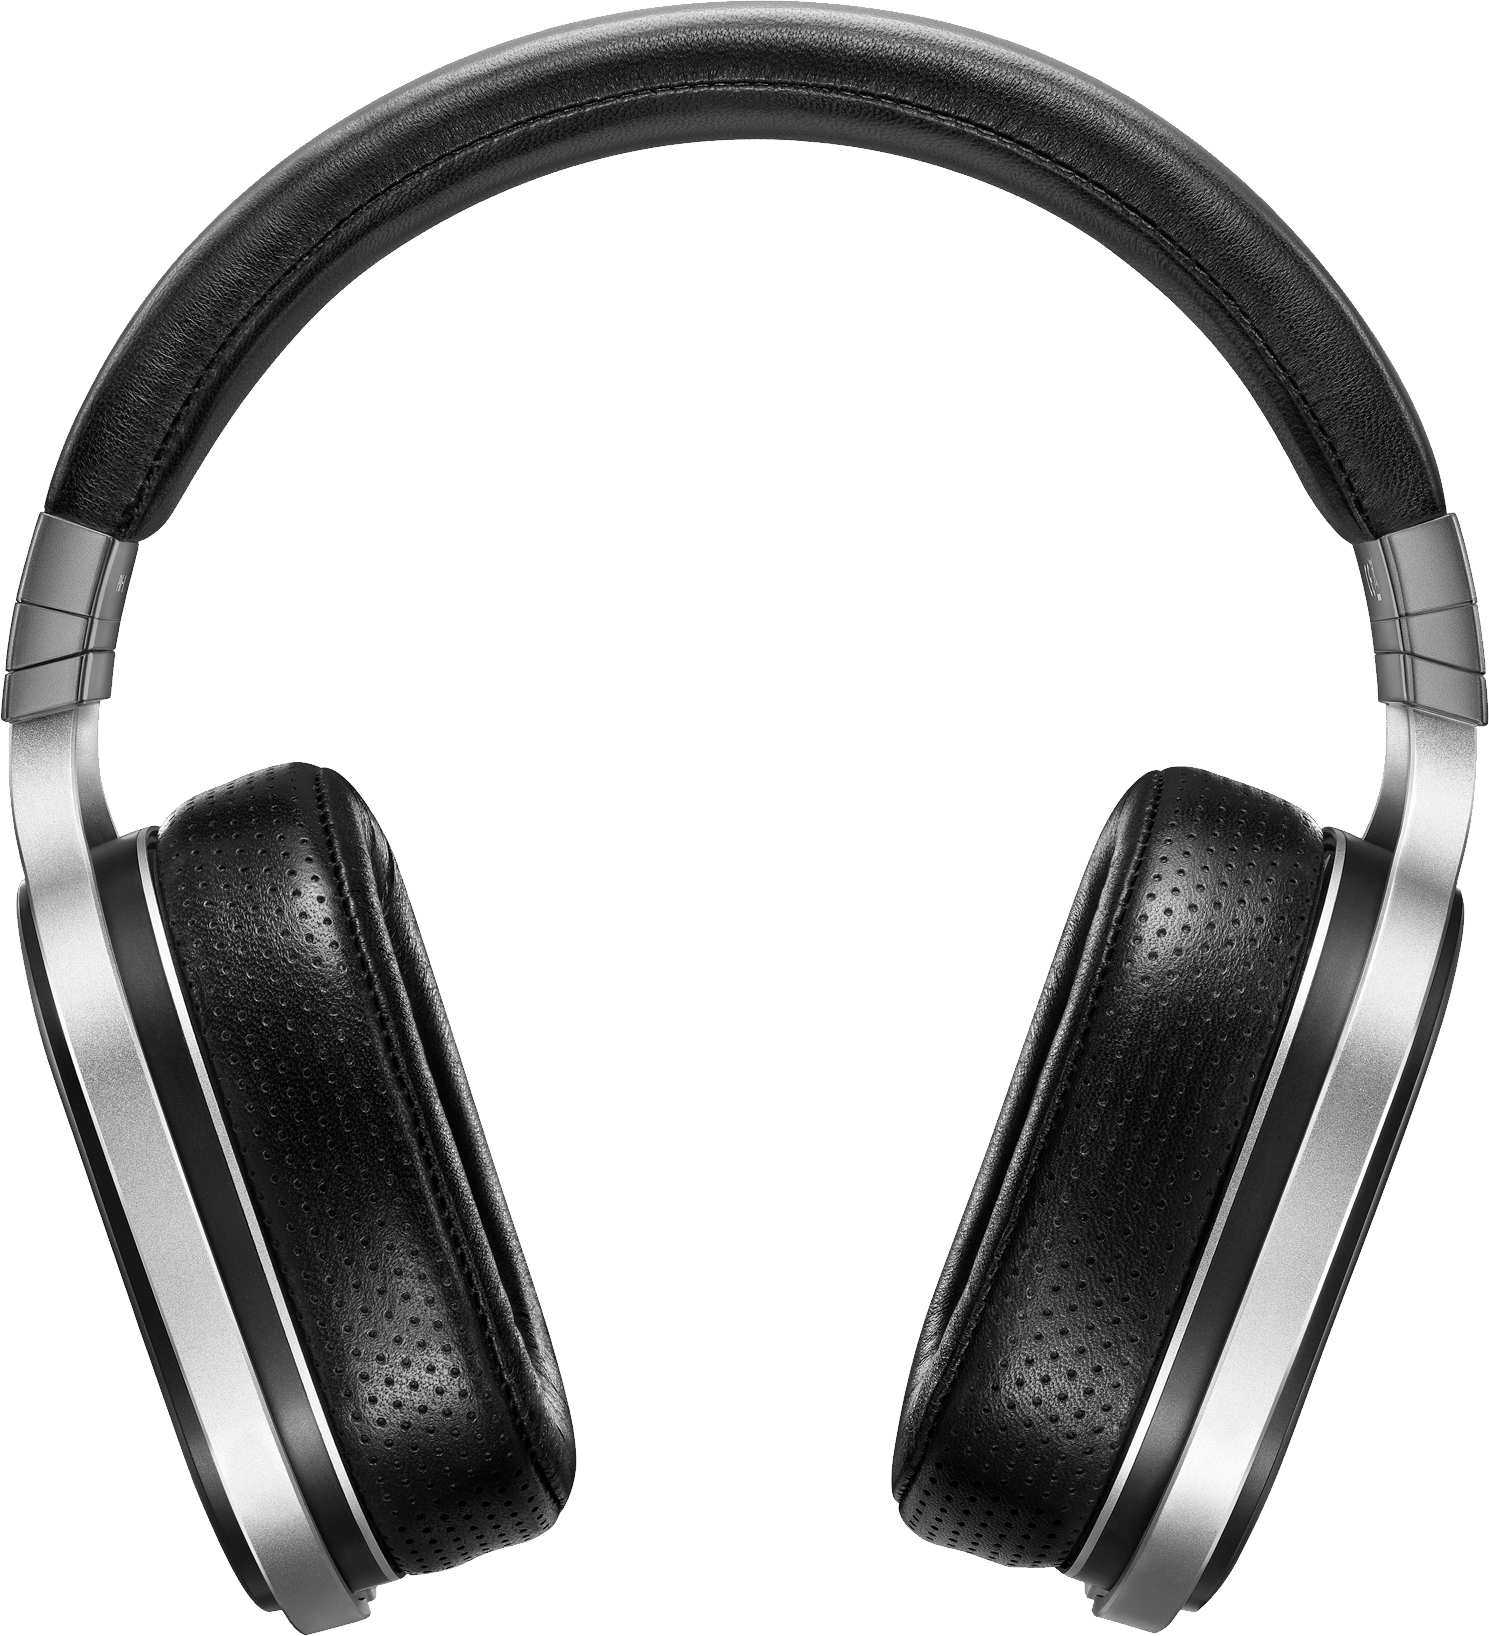 Headphones PNG images Download 